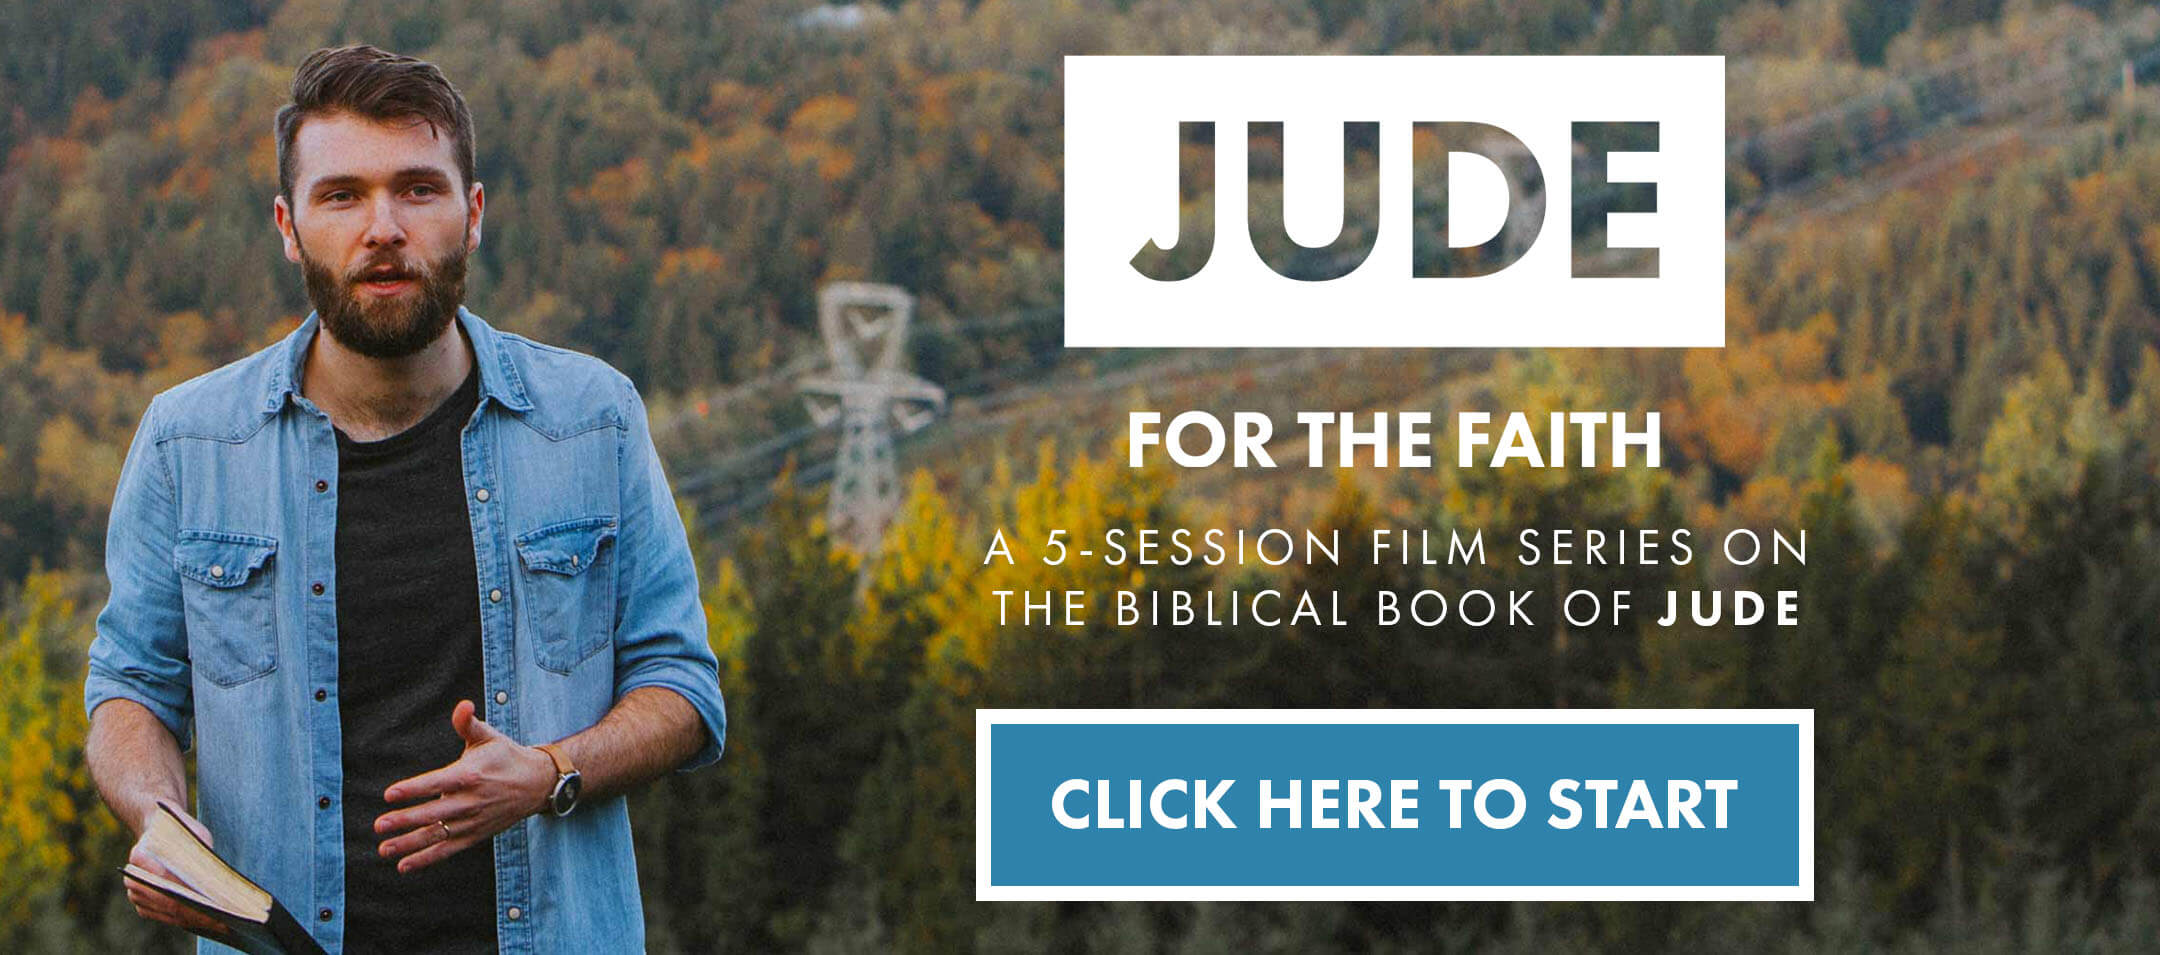 jude-homepage-card